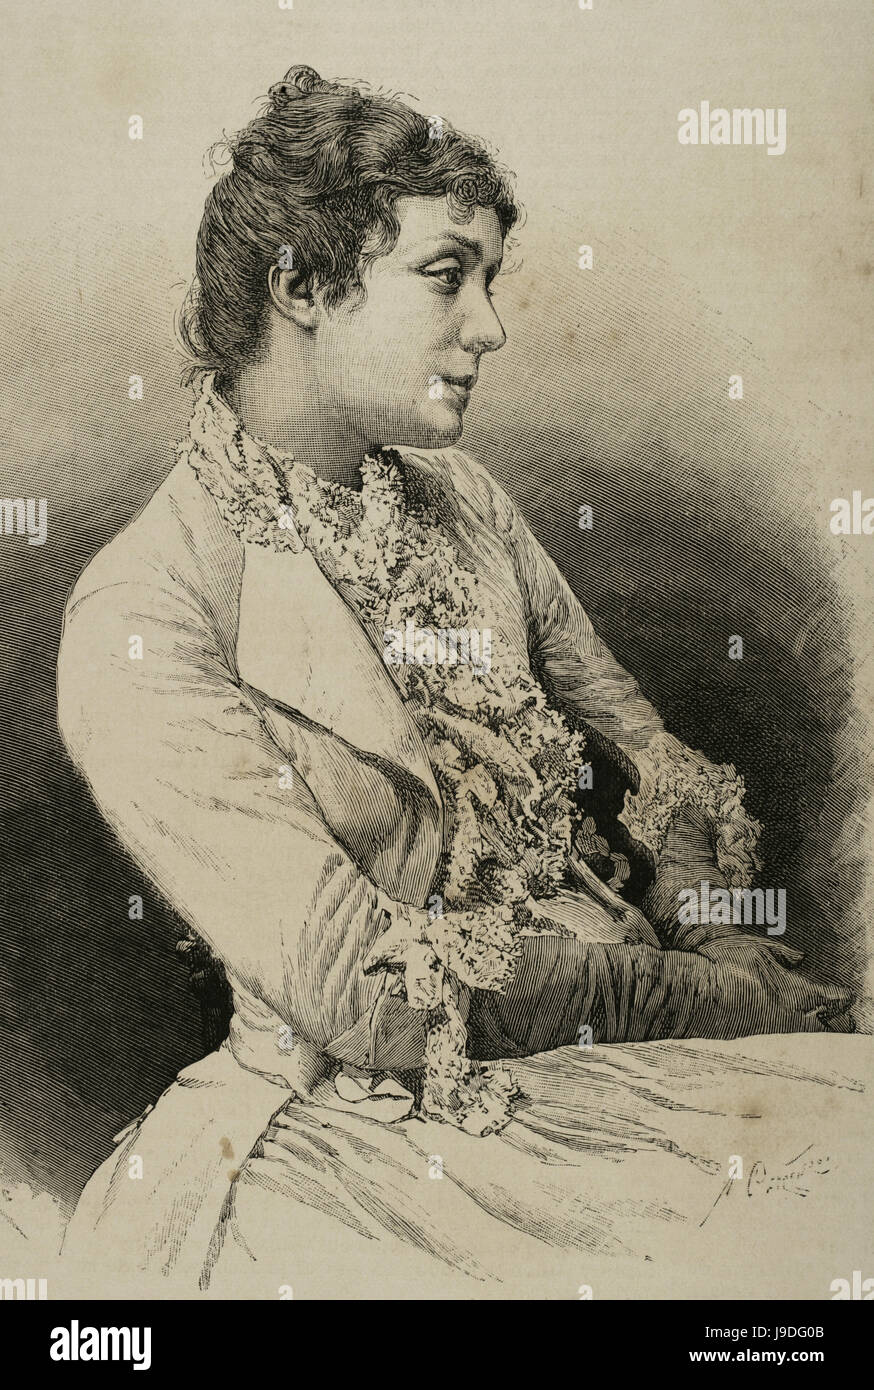 Eleonora Duse (1858-1924). Italian actress. Portrait. Engraving by Arturo Carretero. "La Ilustracion Espanola y Americana", 1890. Stock Photo